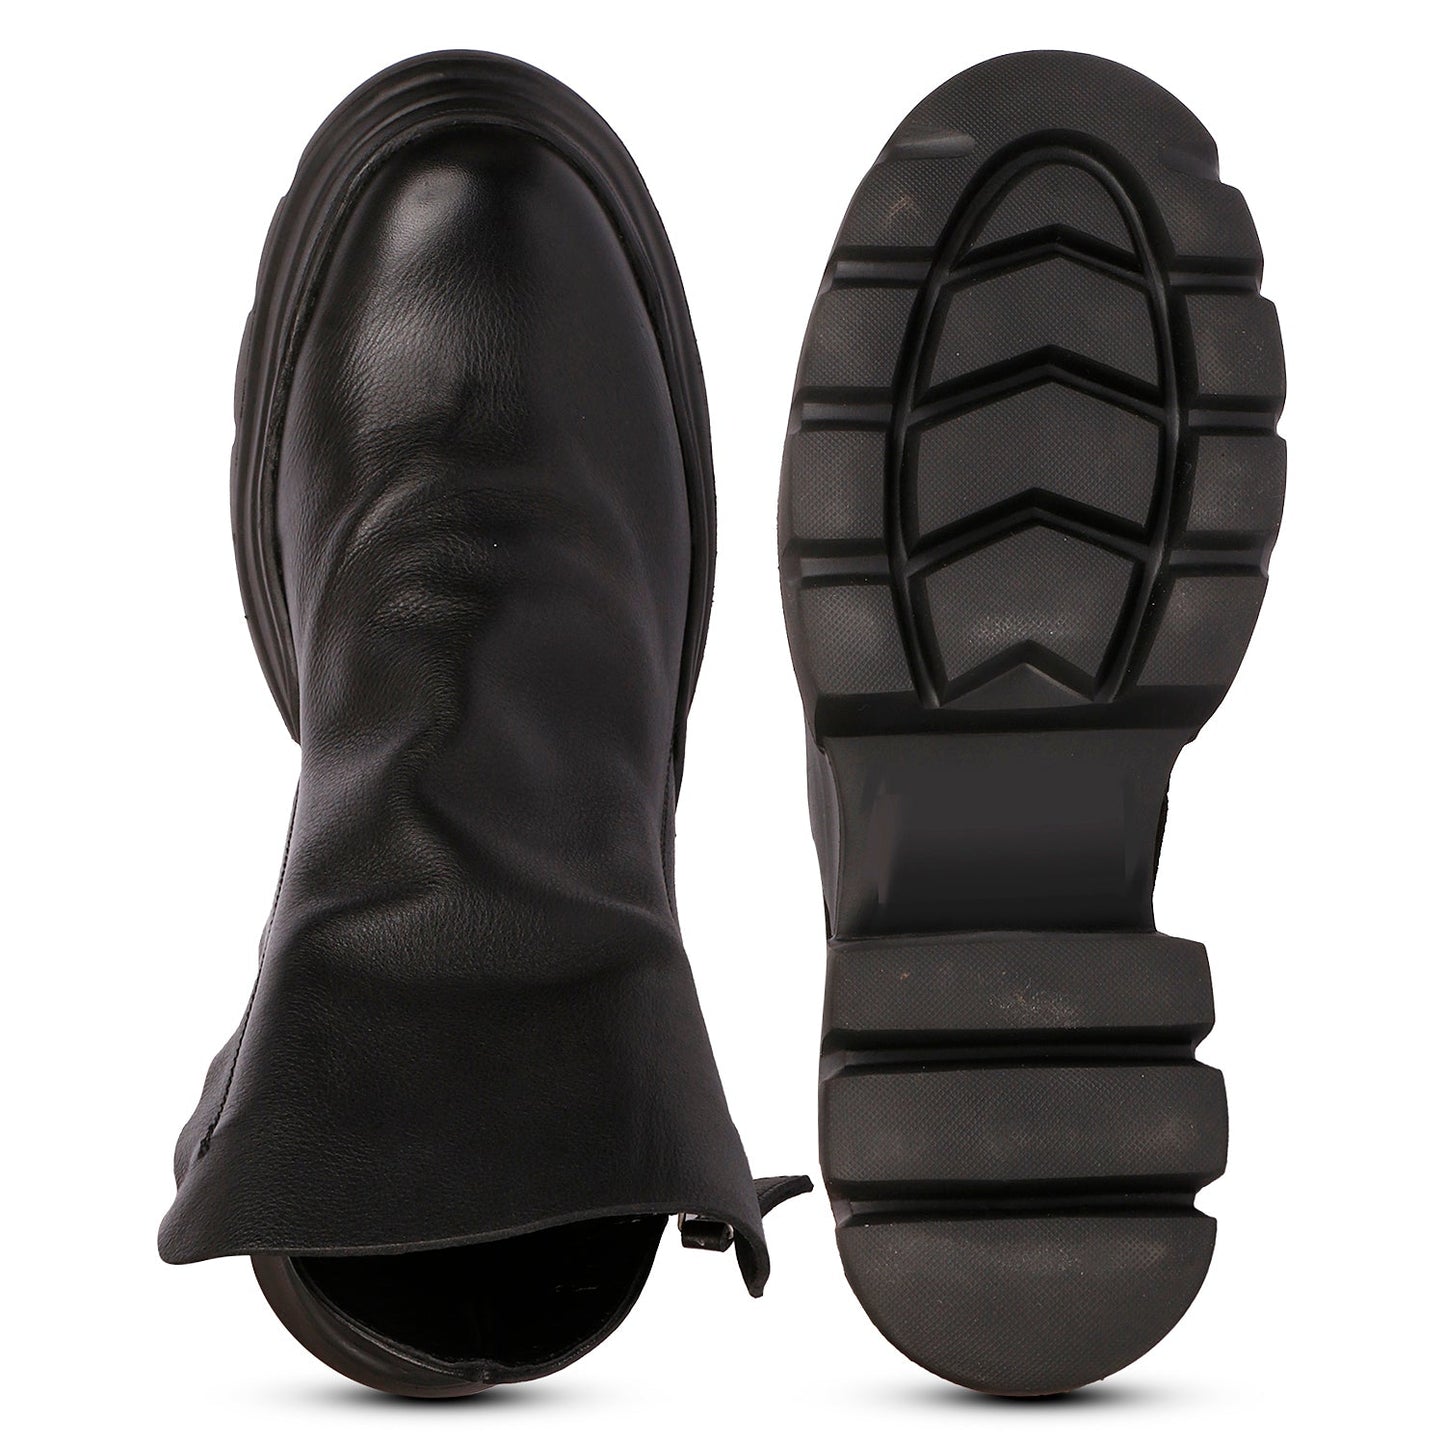 Hayden Leather Boots - Black